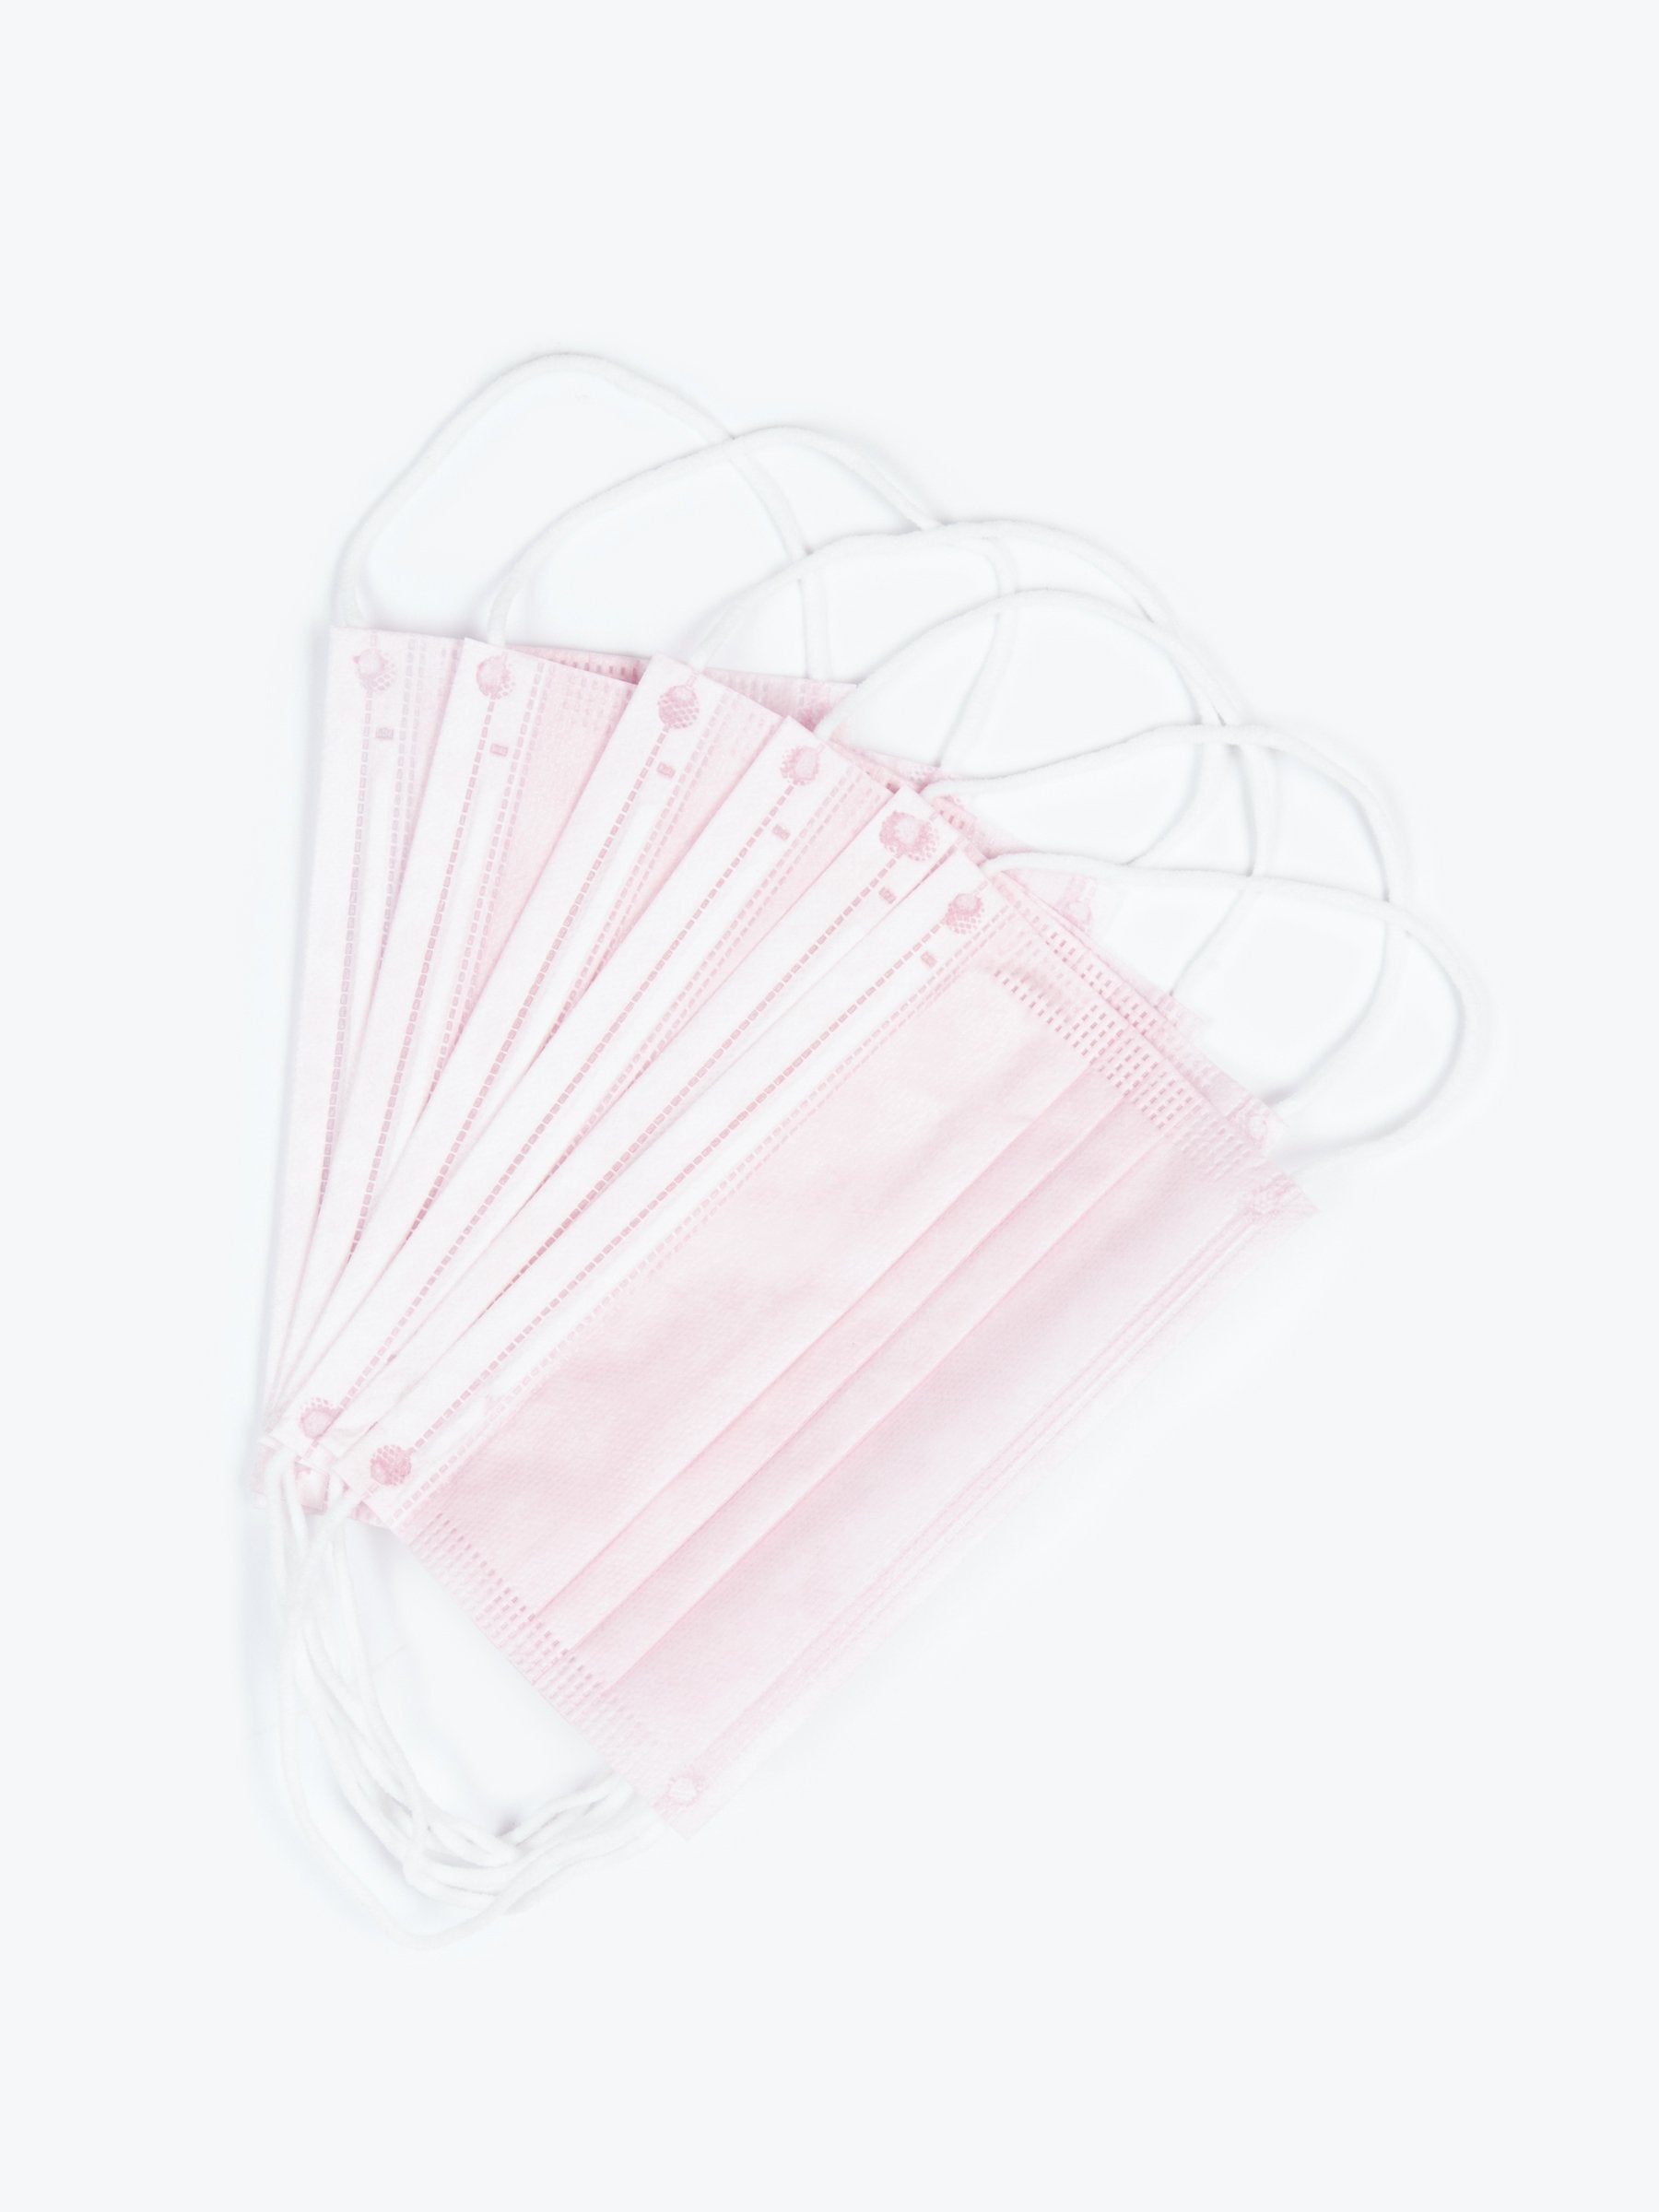 Pink Disposable 3Ply Face Masks (Case of 2,000 Masks)